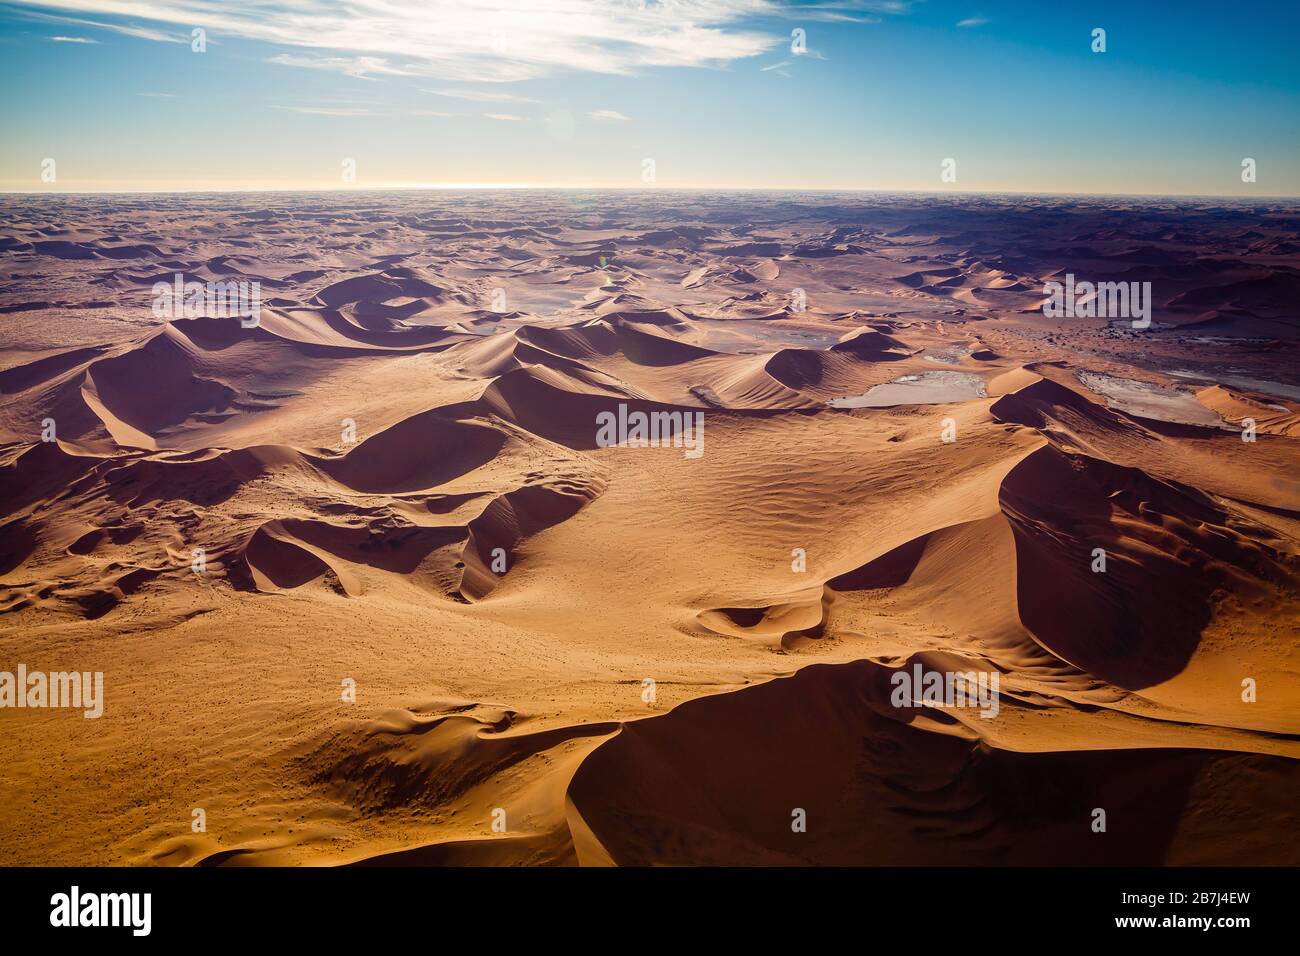 Sand dunes of Namib desert from aircraft on Skeleton coast in Namibia. Stock Photo